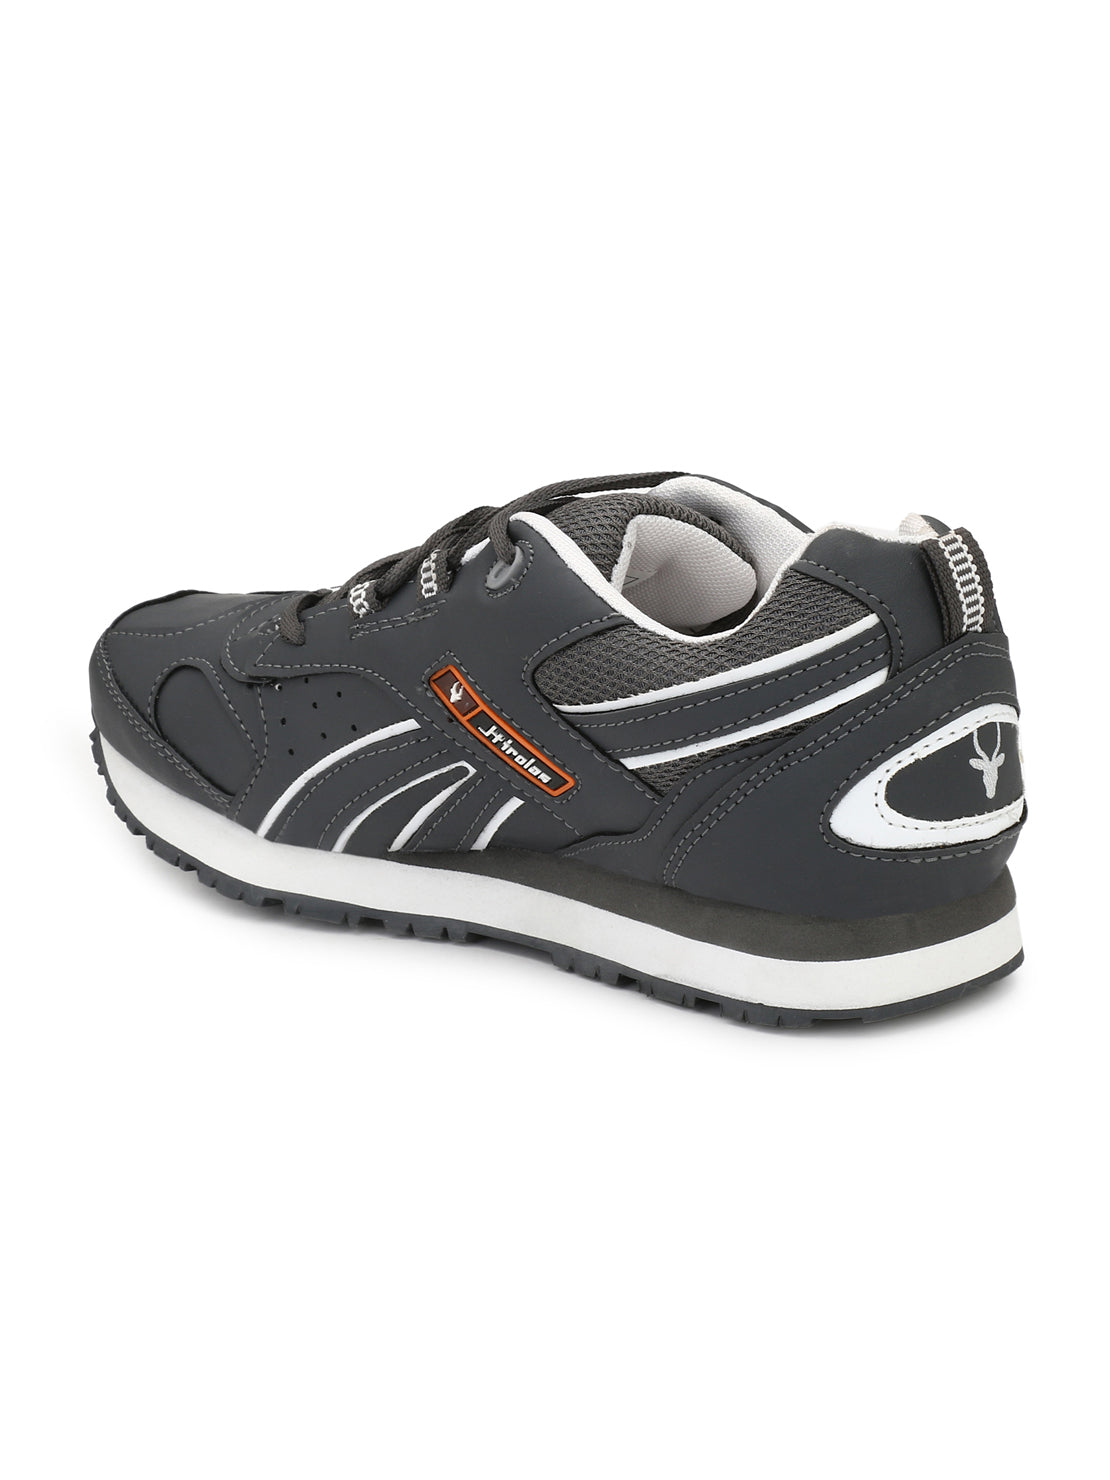 Hirolas® Men's Multisports Shock Absorbing Walking Running Fitness Athletic Training Gym Grey Lace Up Sneaker Sport Shoes (HRL2044G)